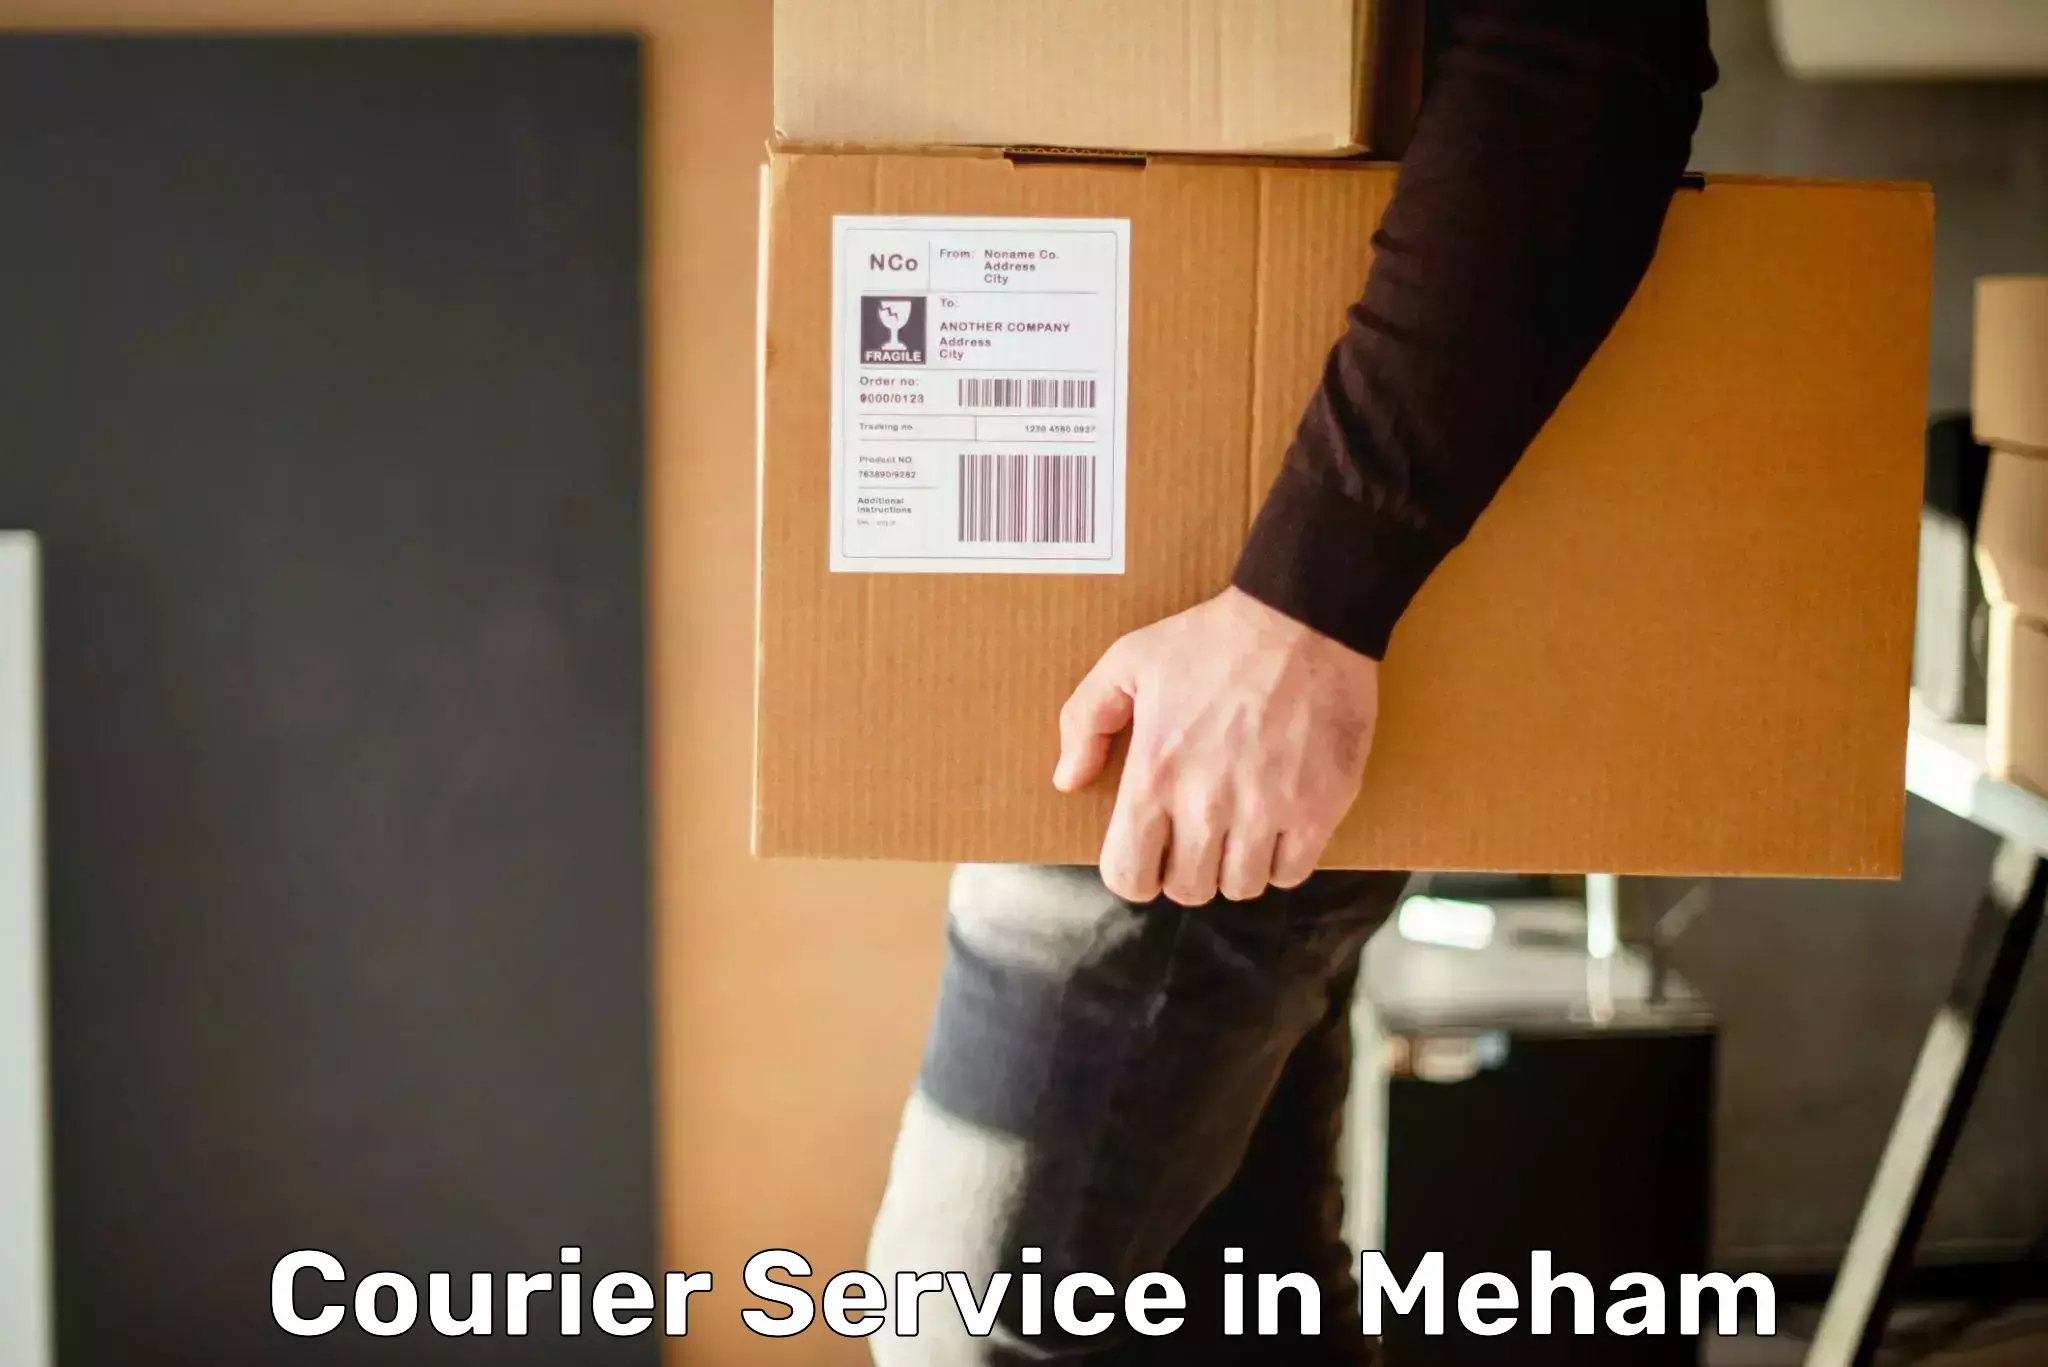 Streamlined logistics management in Meham